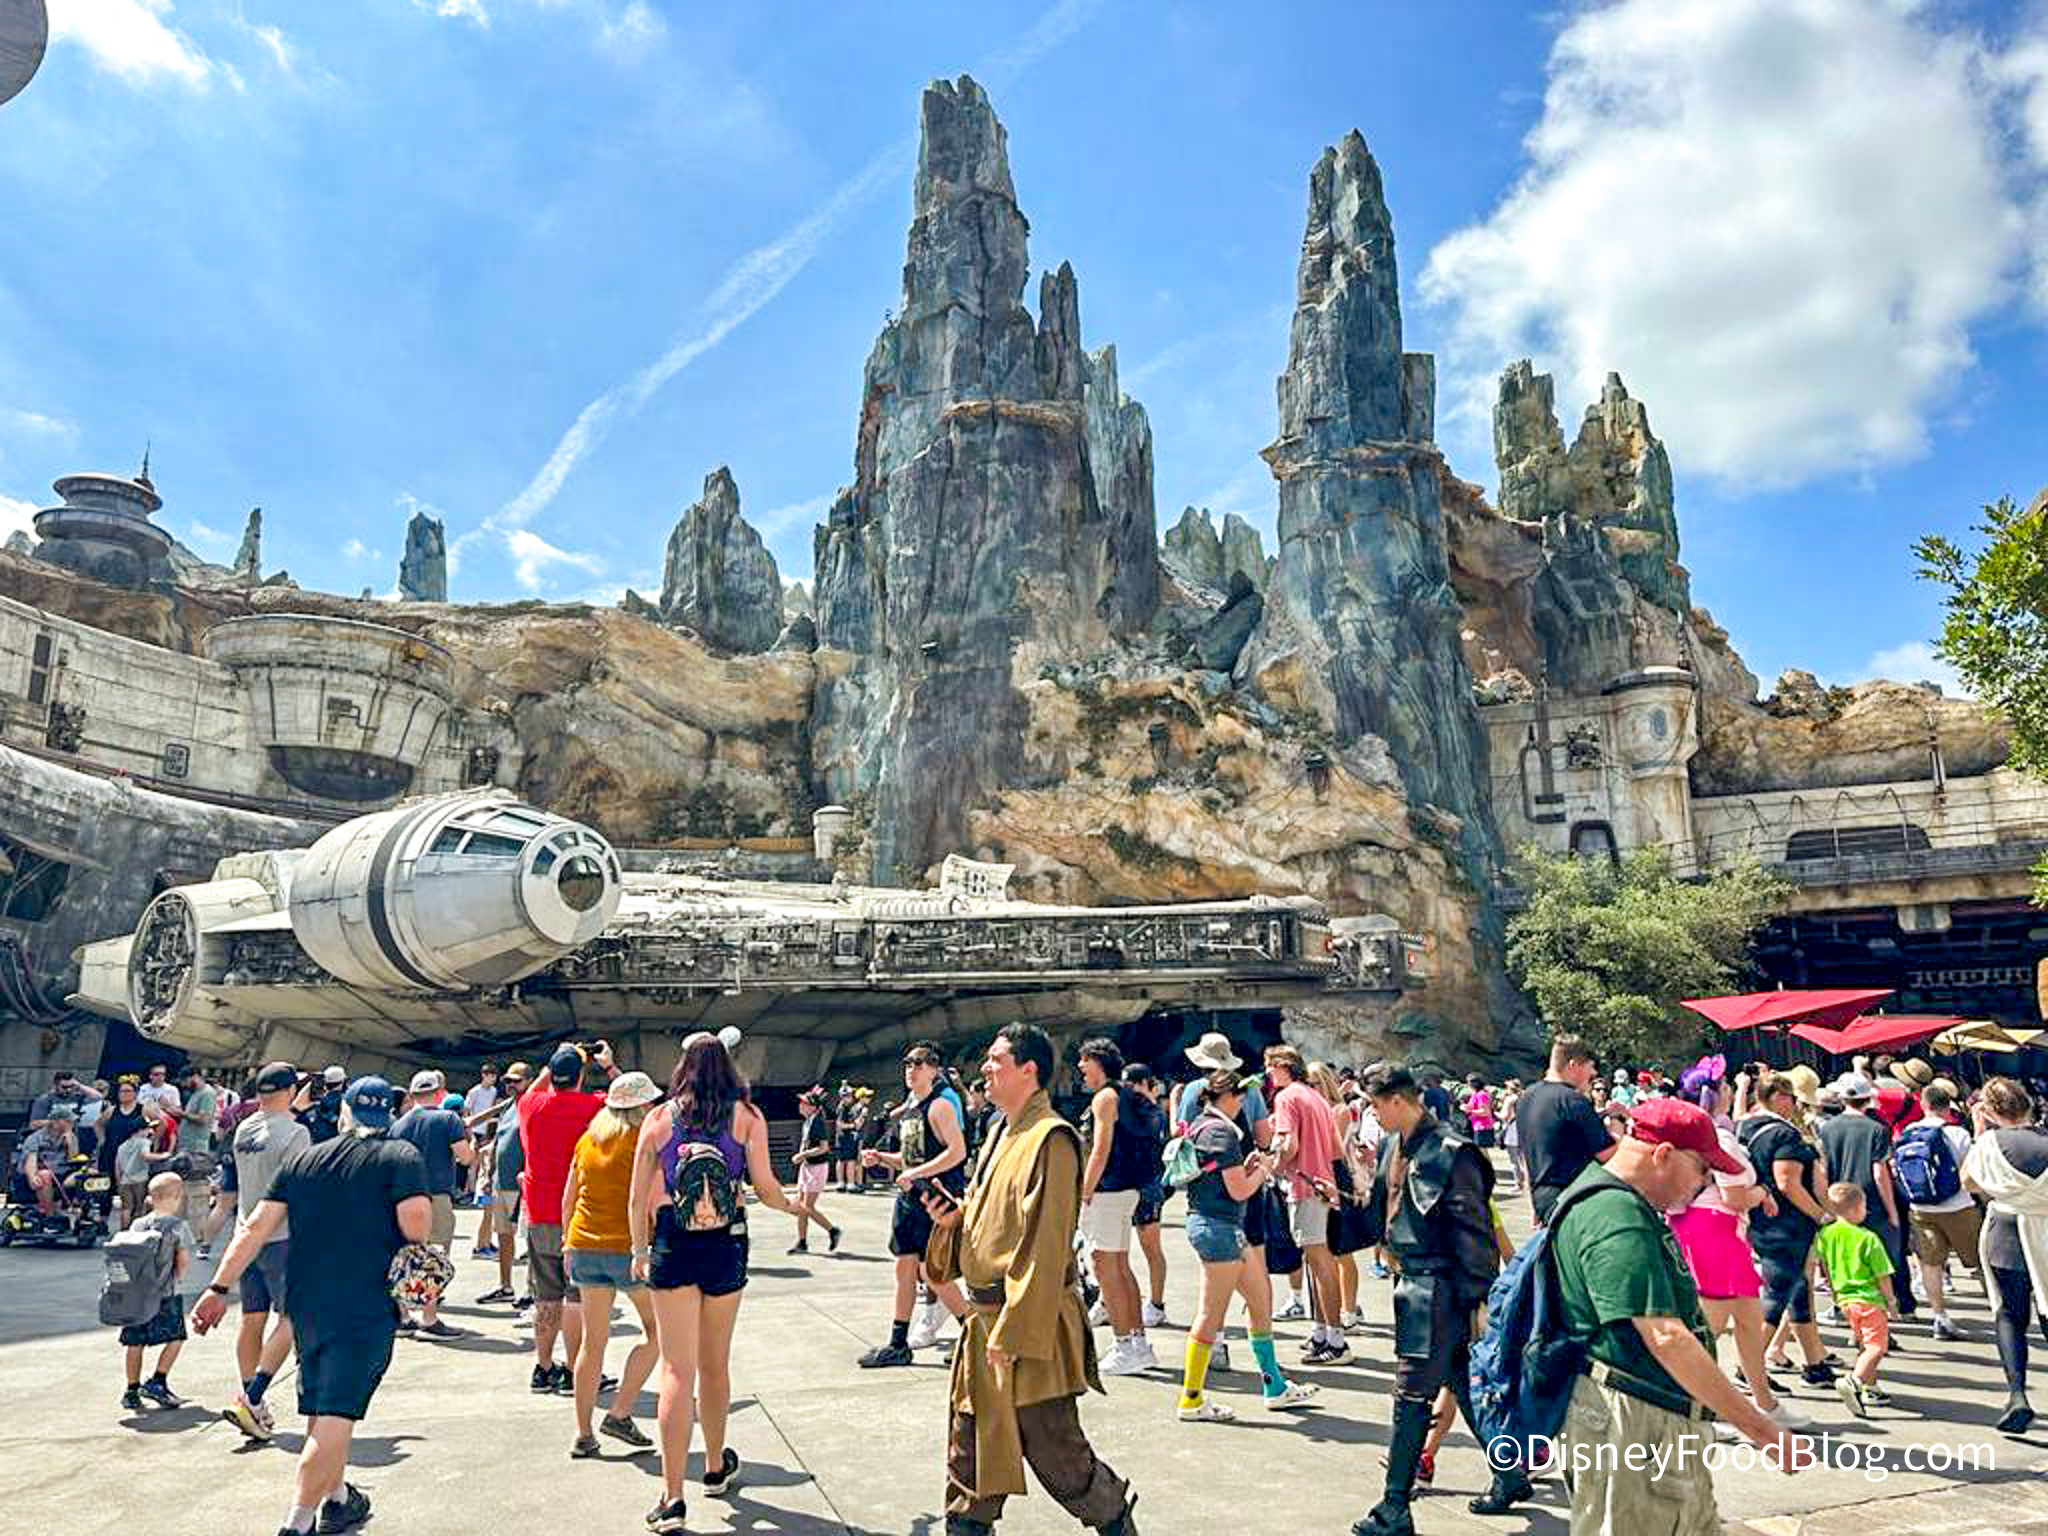 Star Wars Celebration Heads to Japan in 2025